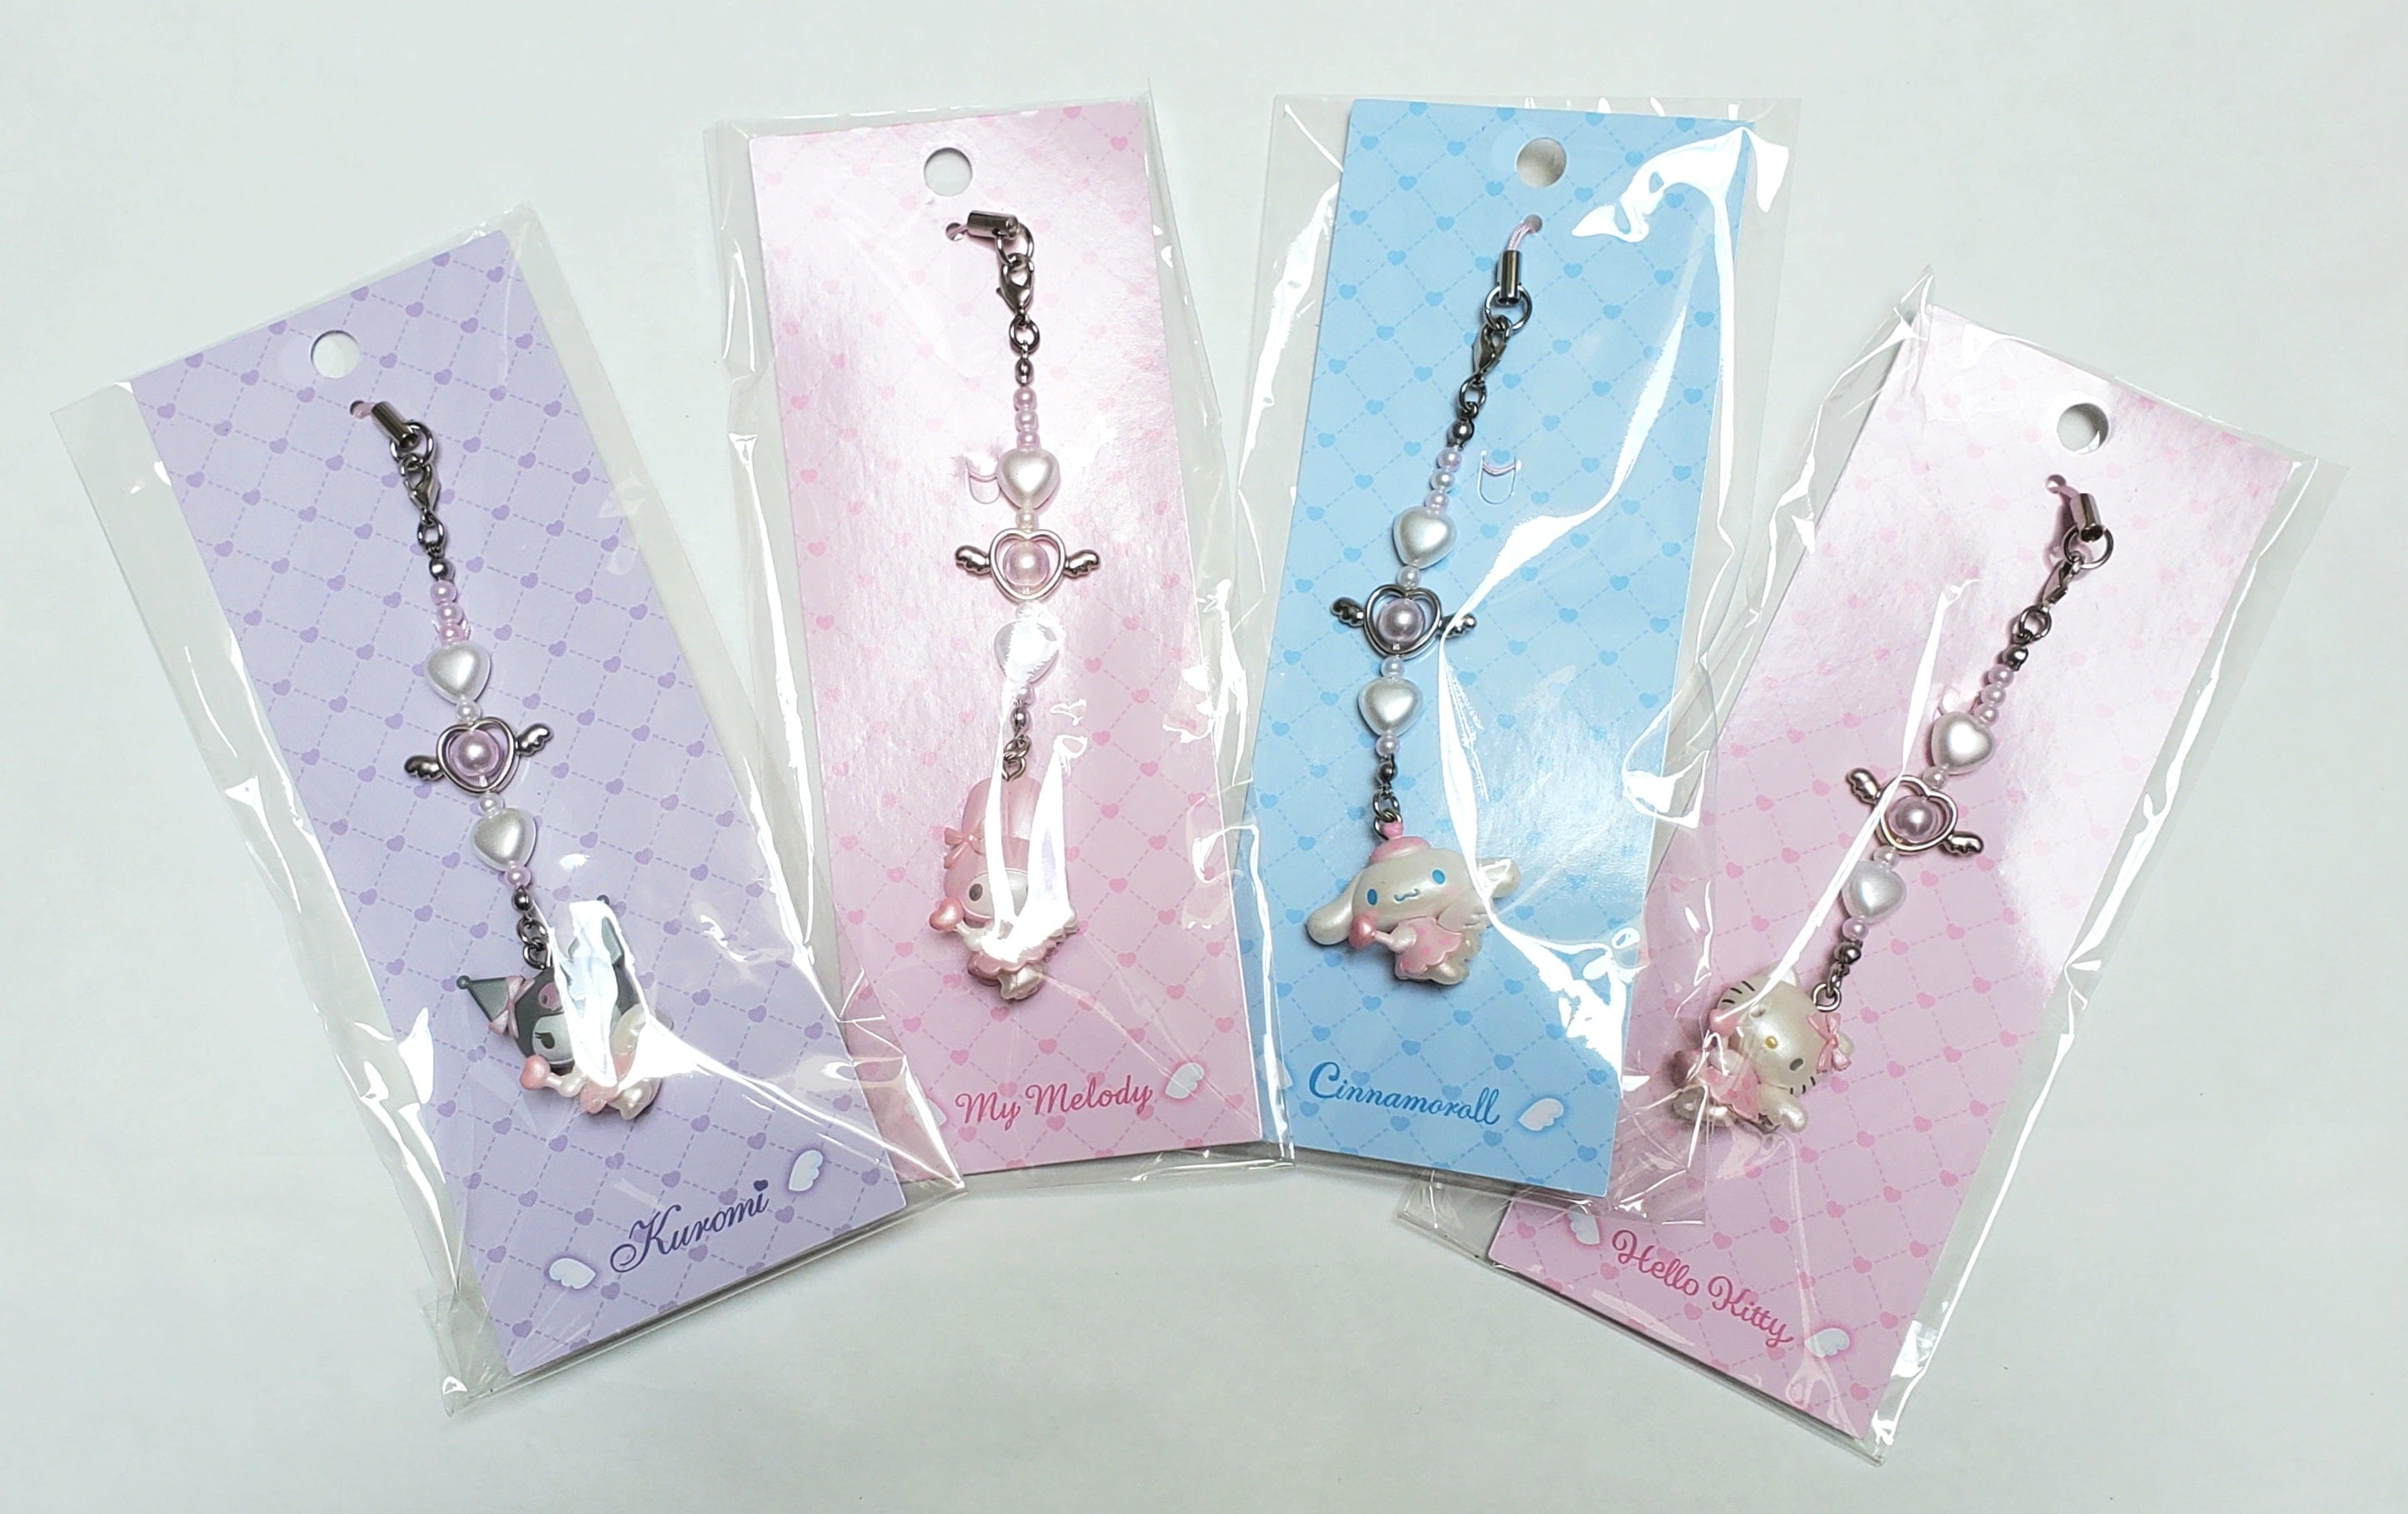 Enesco Sanrio Dreamy Phone Charms: Cinnamoroll, My Melody, Kuromi, Hello Kitty Kawaii Gifts